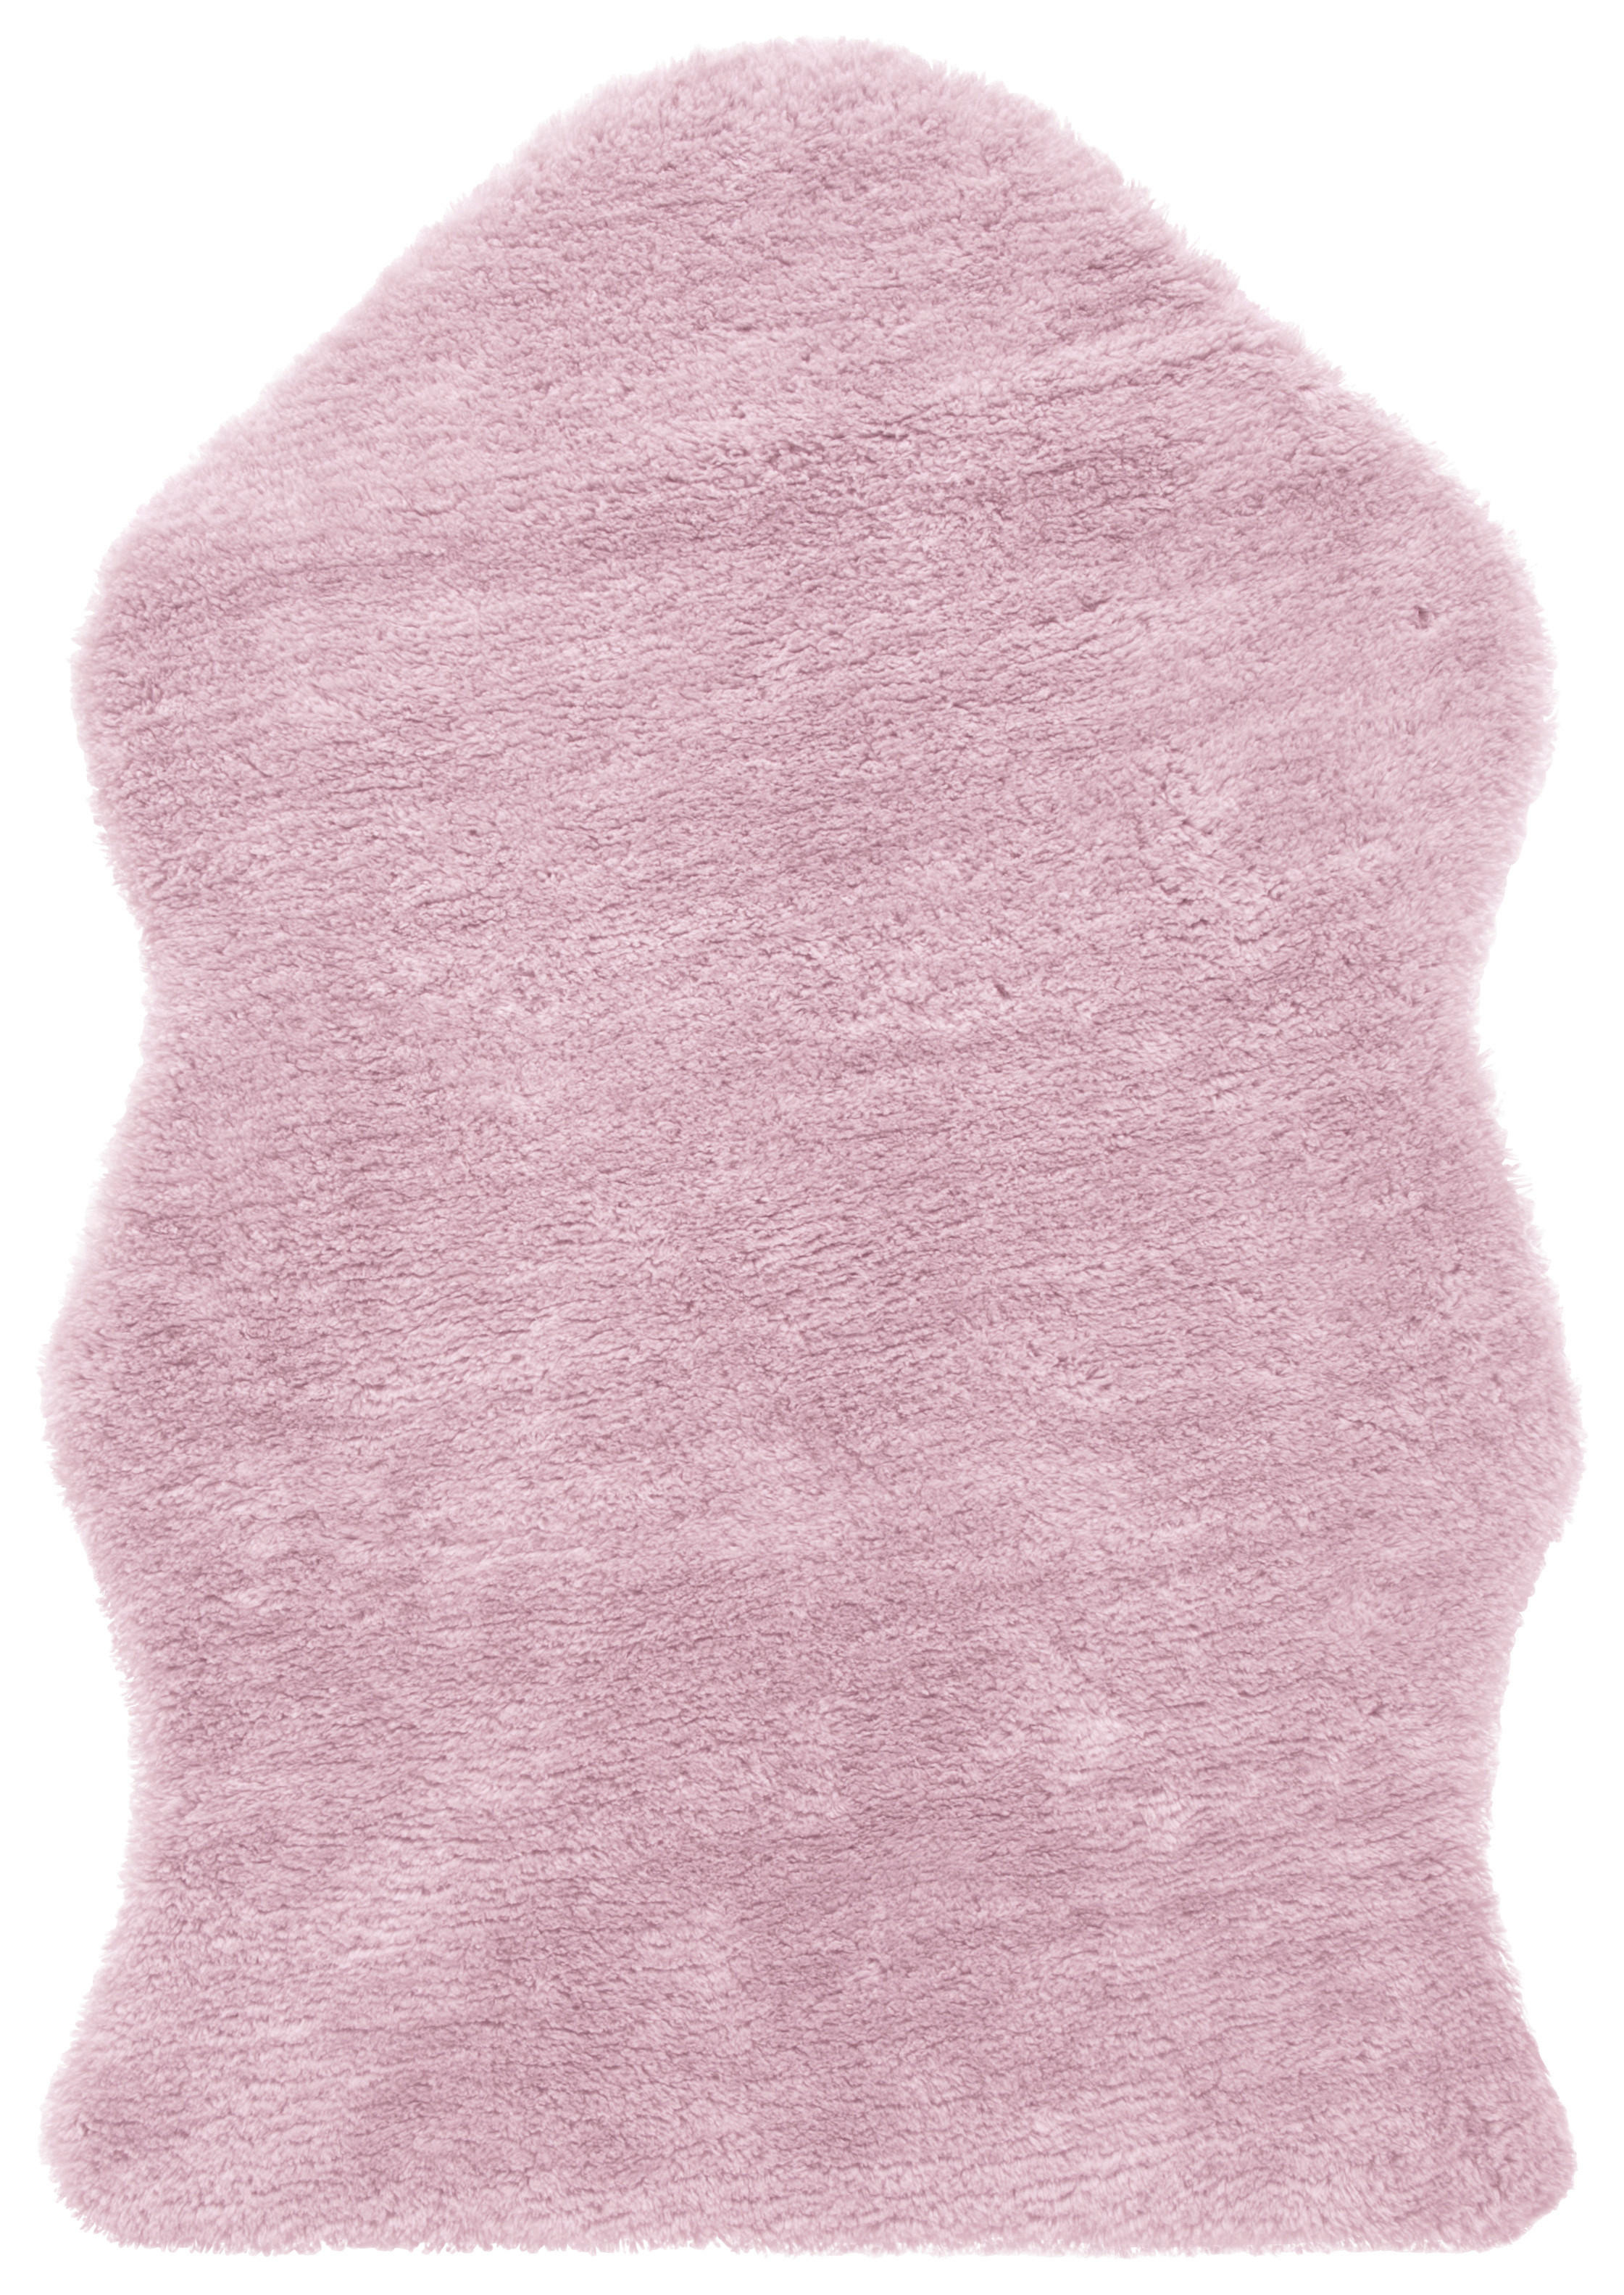 Fellimitat rosa B/L: ca. 55x80 cm Fellimitat 708018 55x80cm - rosa (55,00/80,00cm)